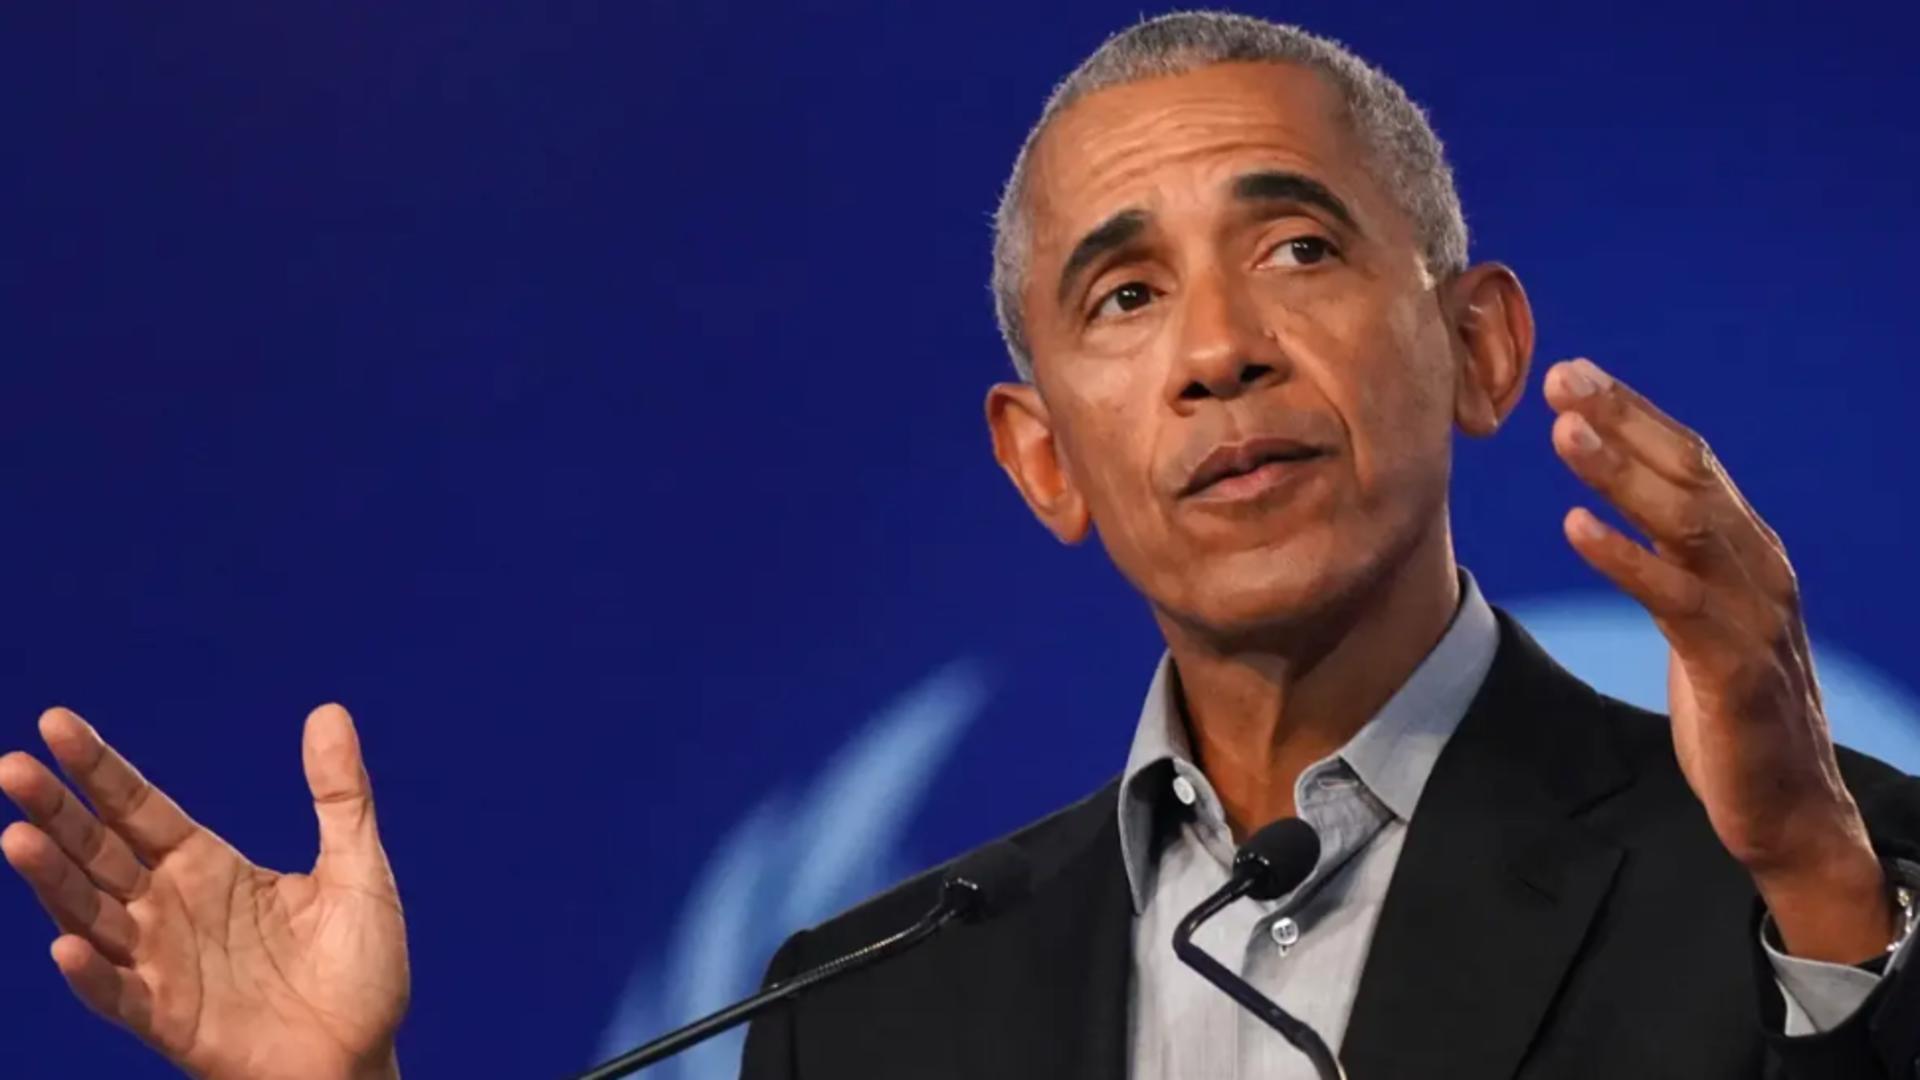 Barack Obama, fost președinte american (2009-2017)